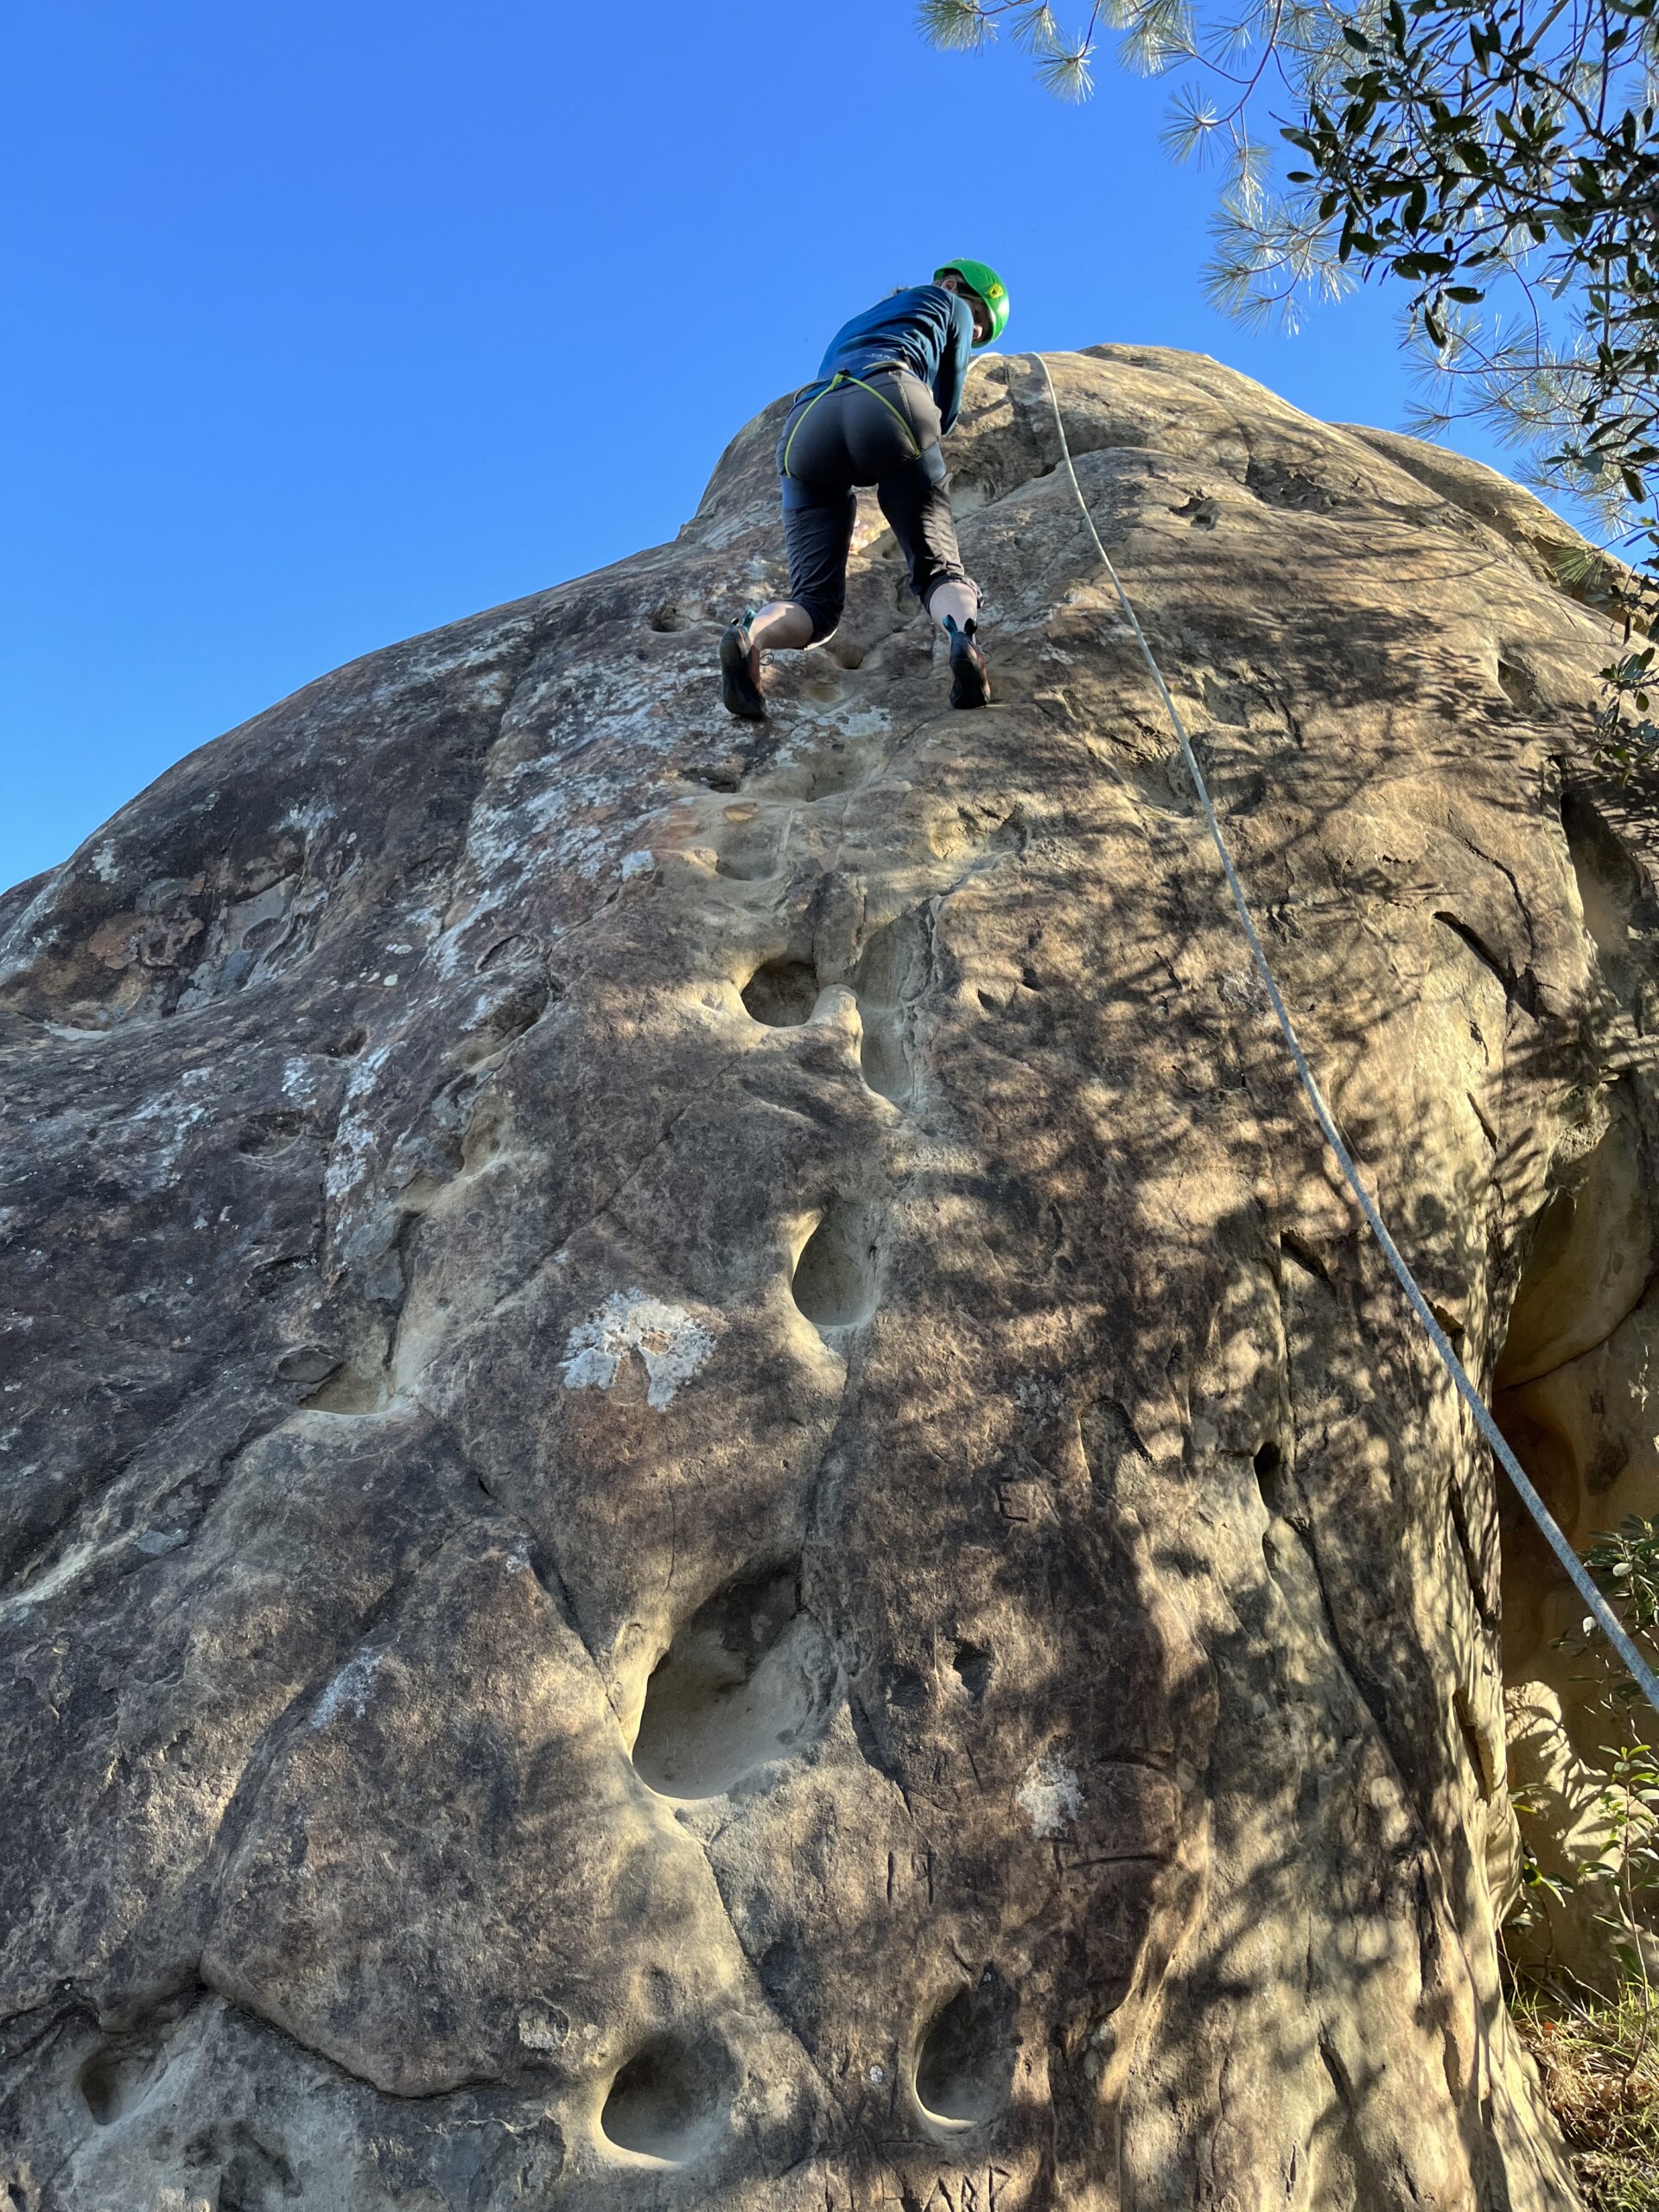 Rock climber scaling a cliff